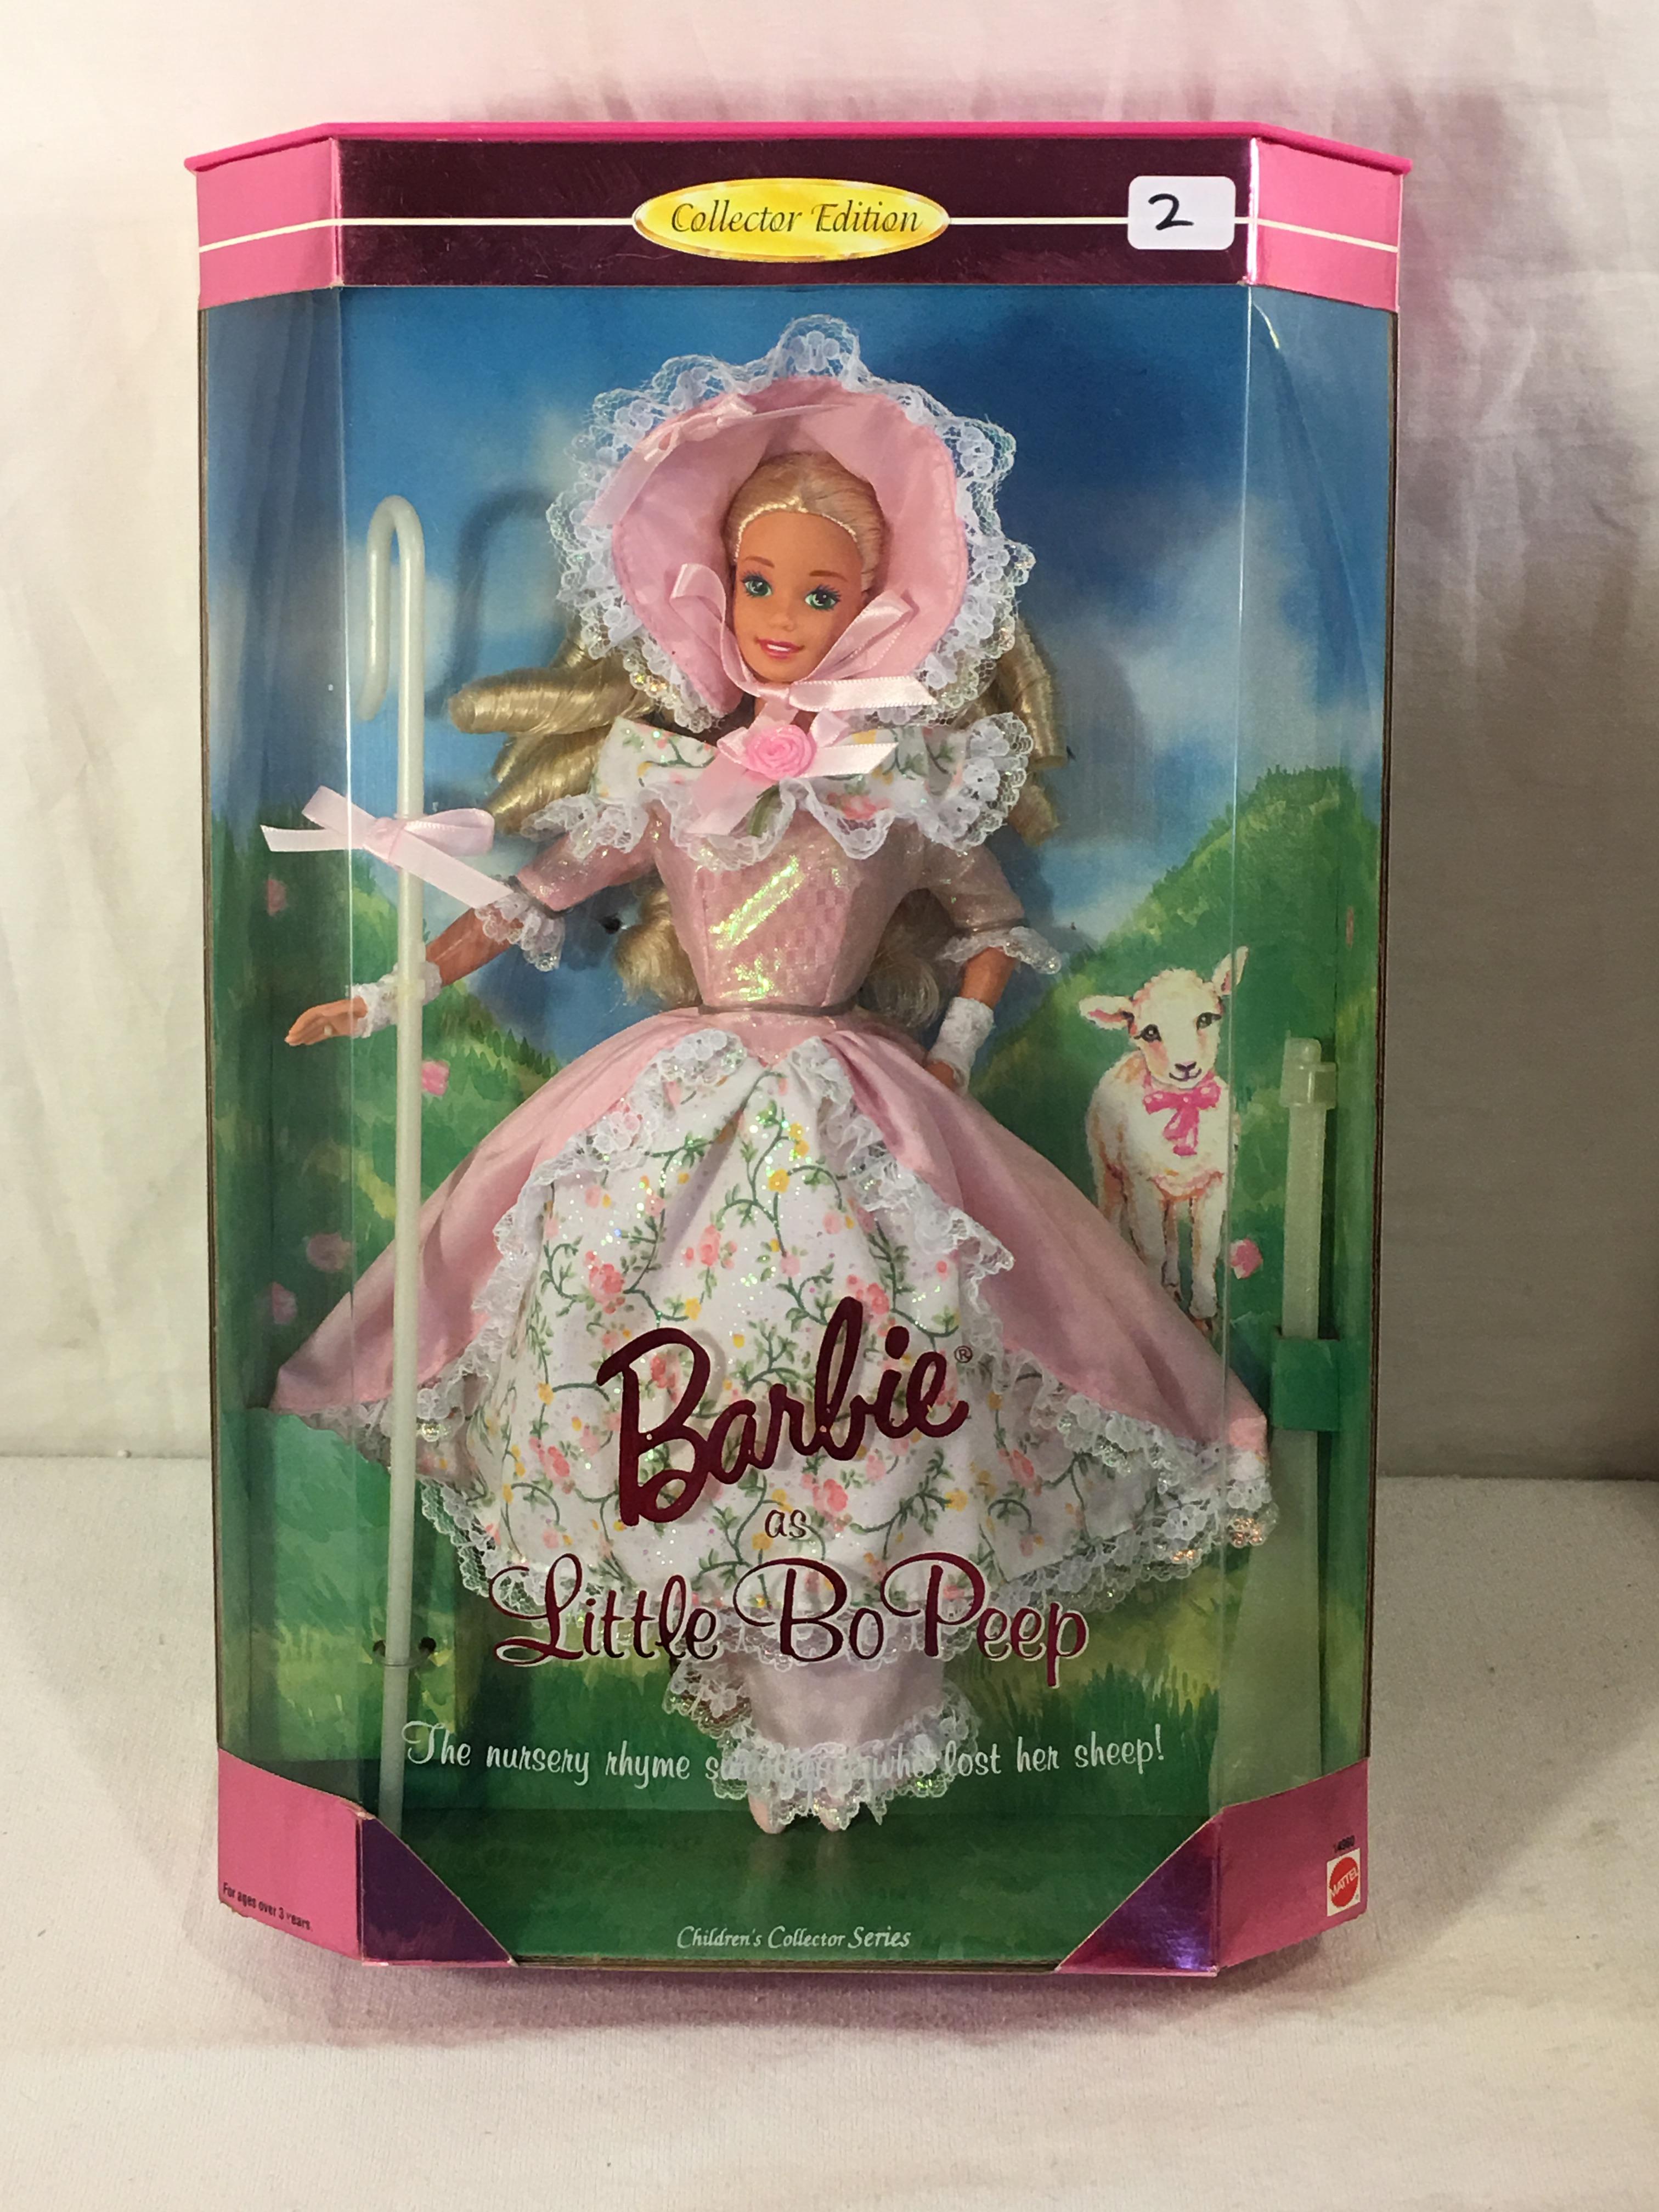 NIB Collector Little Bo Peep Barbie Doll Box: 13.5"x9"